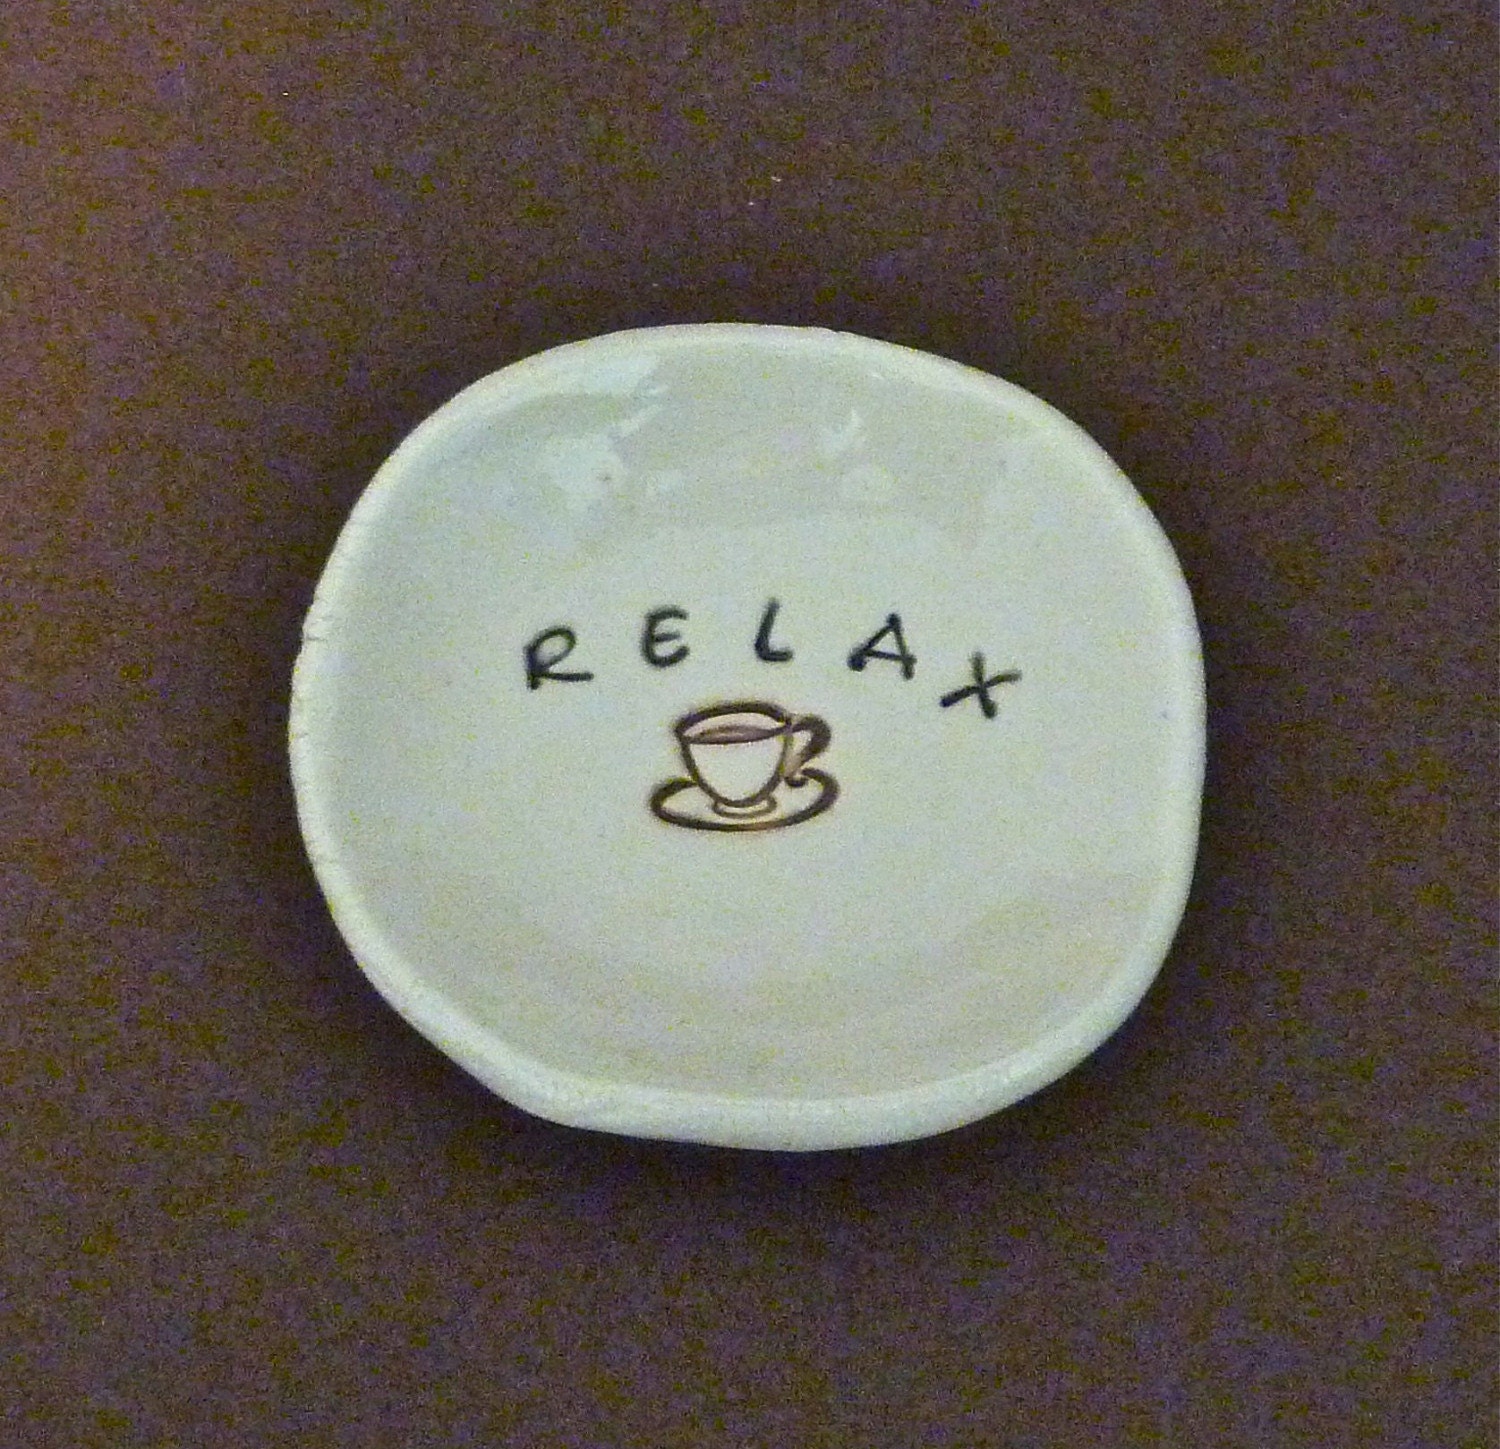 Relax coffee dish